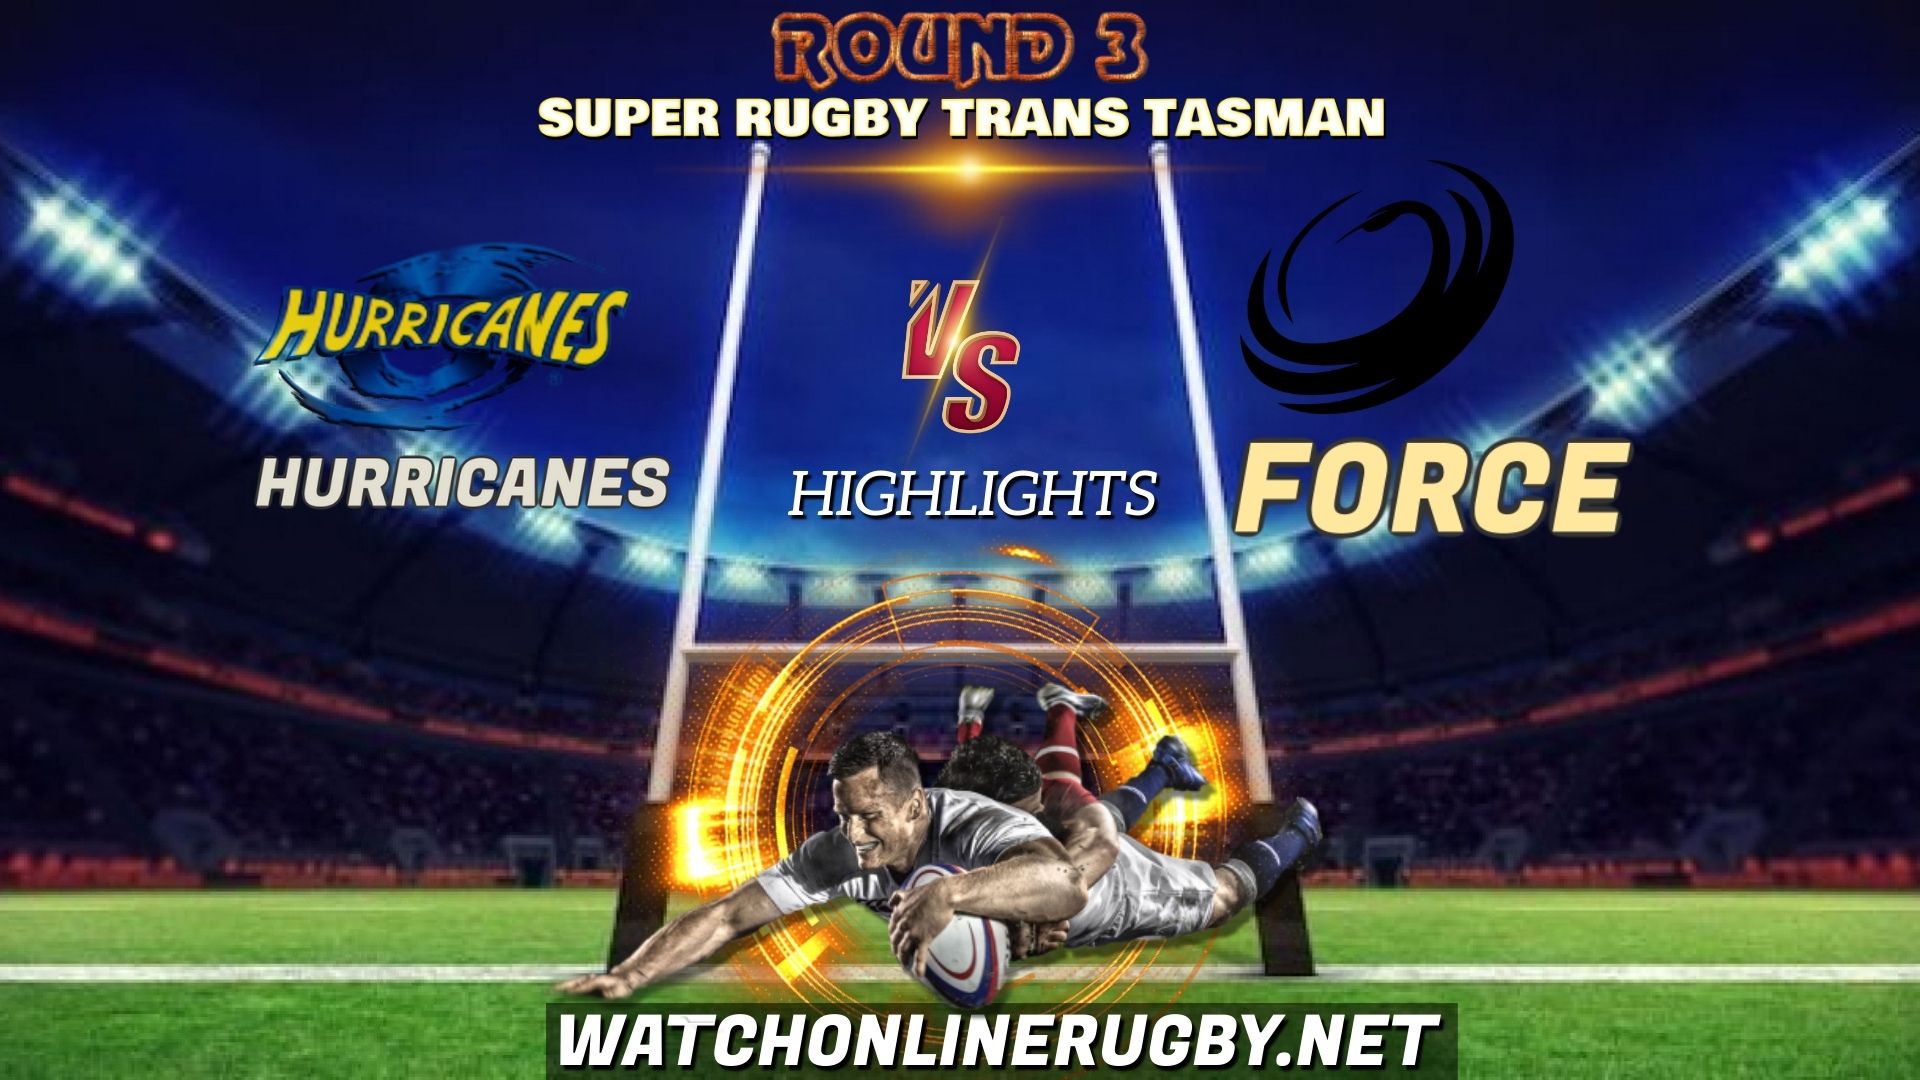 Hurricanes Vs Force Super Rugby Trans Tasman 2021 RD 3